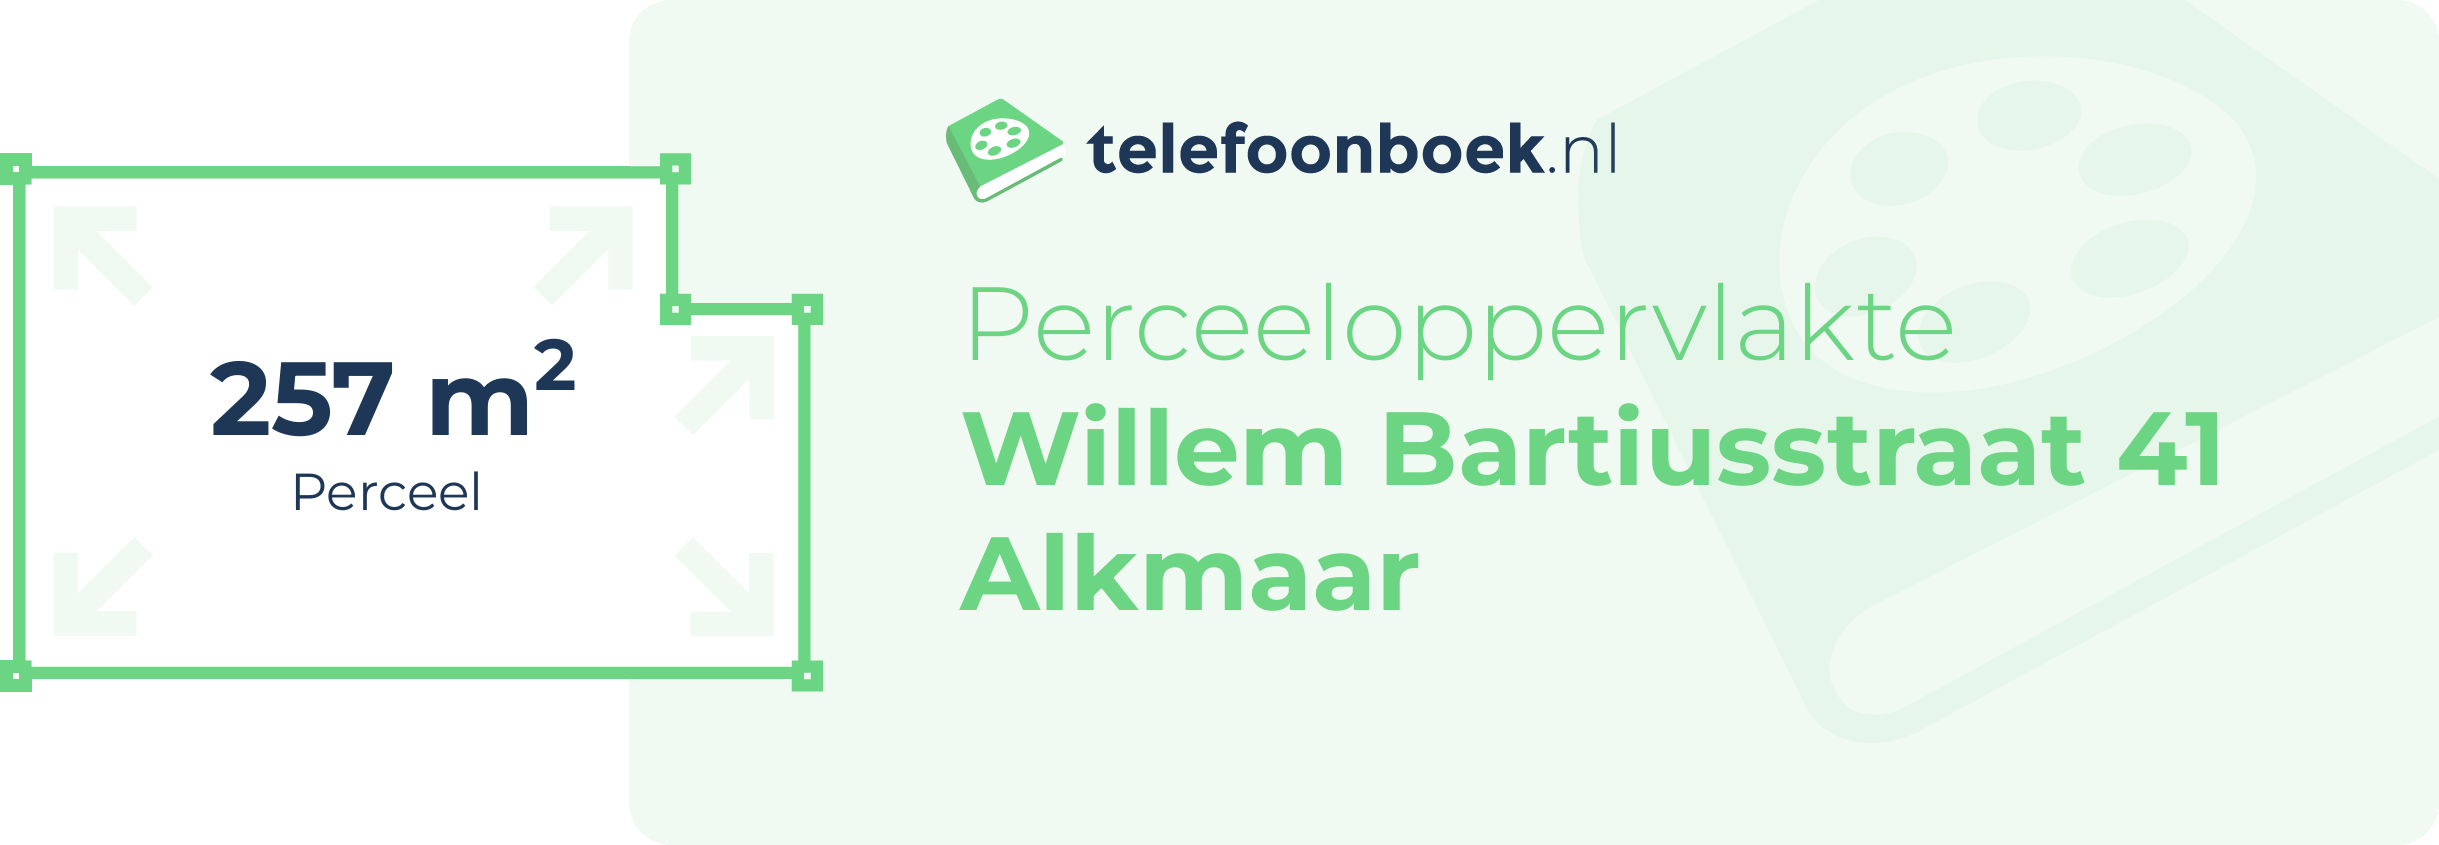 Perceeloppervlakte Willem Bartiusstraat 41 Alkmaar